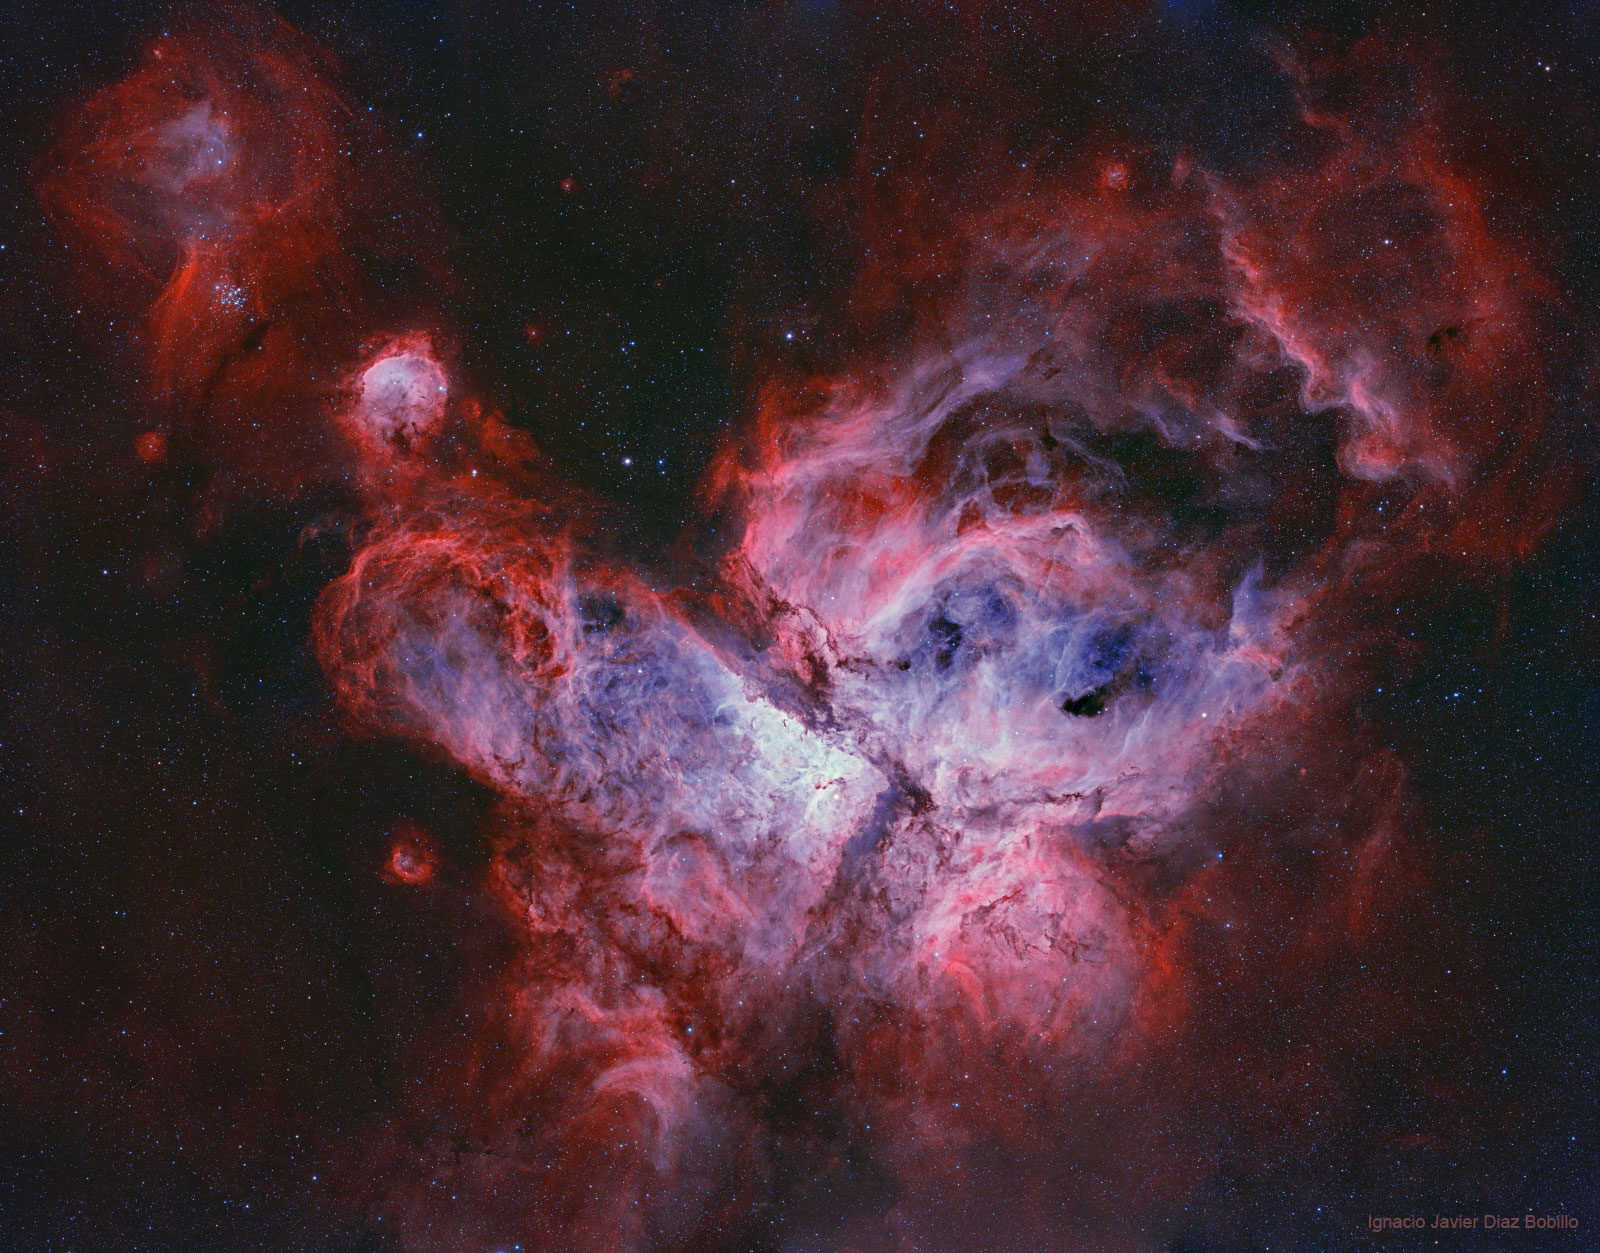 APOD: 2022 April 25 - The Great Nebula in Carina